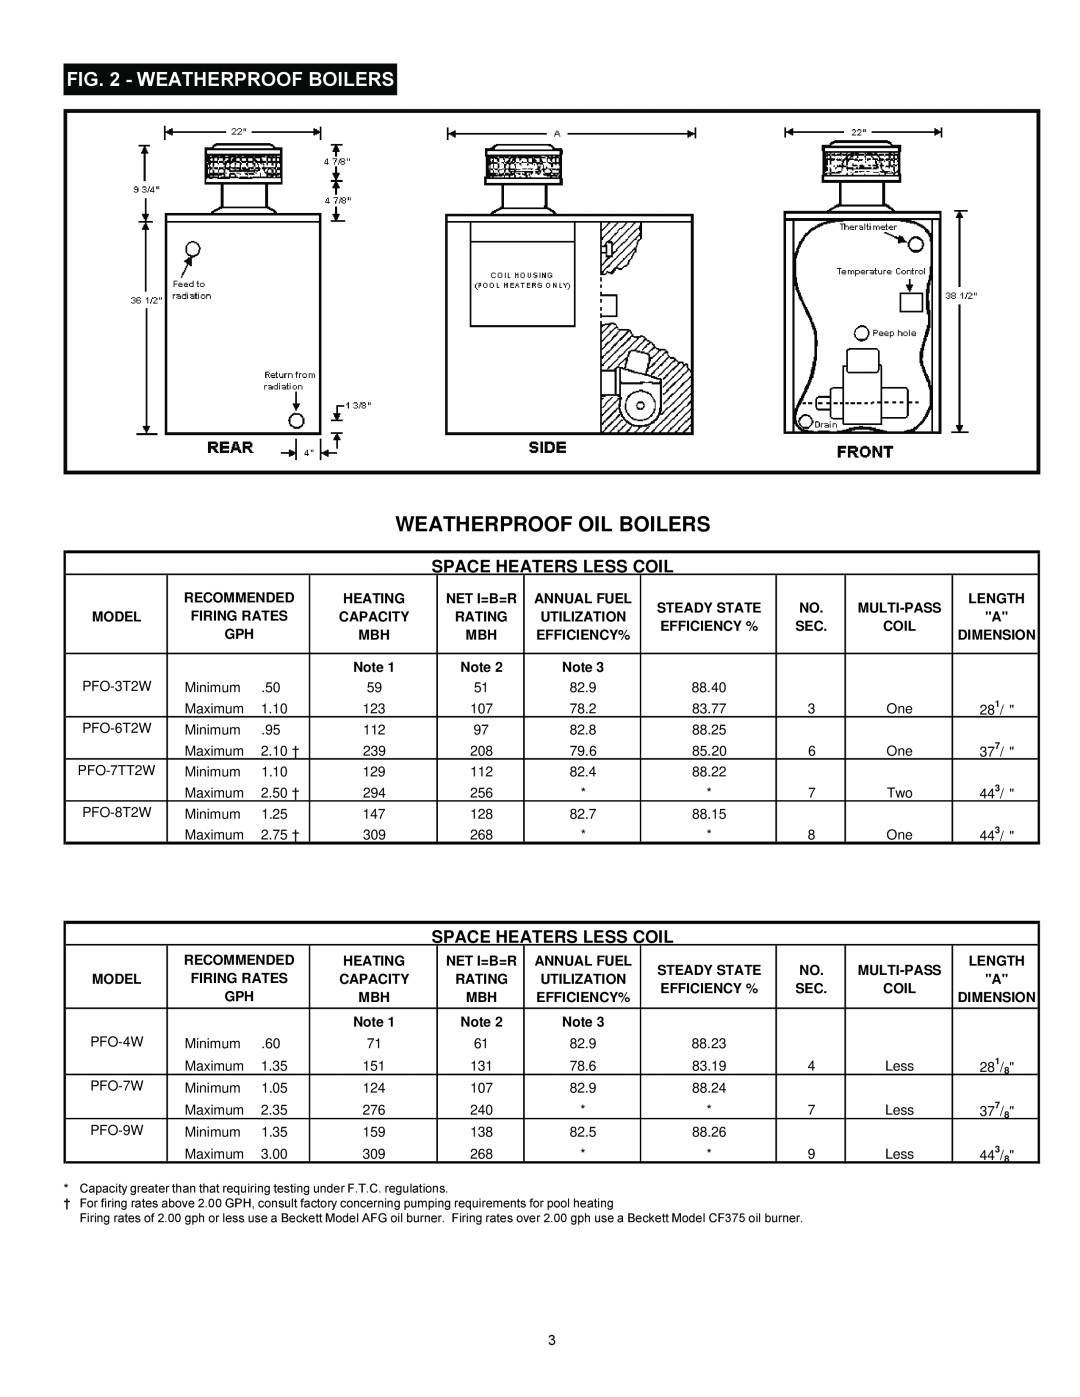 Ultimate Products PF Series manual Weatherproof Oil Boilers, Weatherproof Boilers, Space Heaters Less Coil 